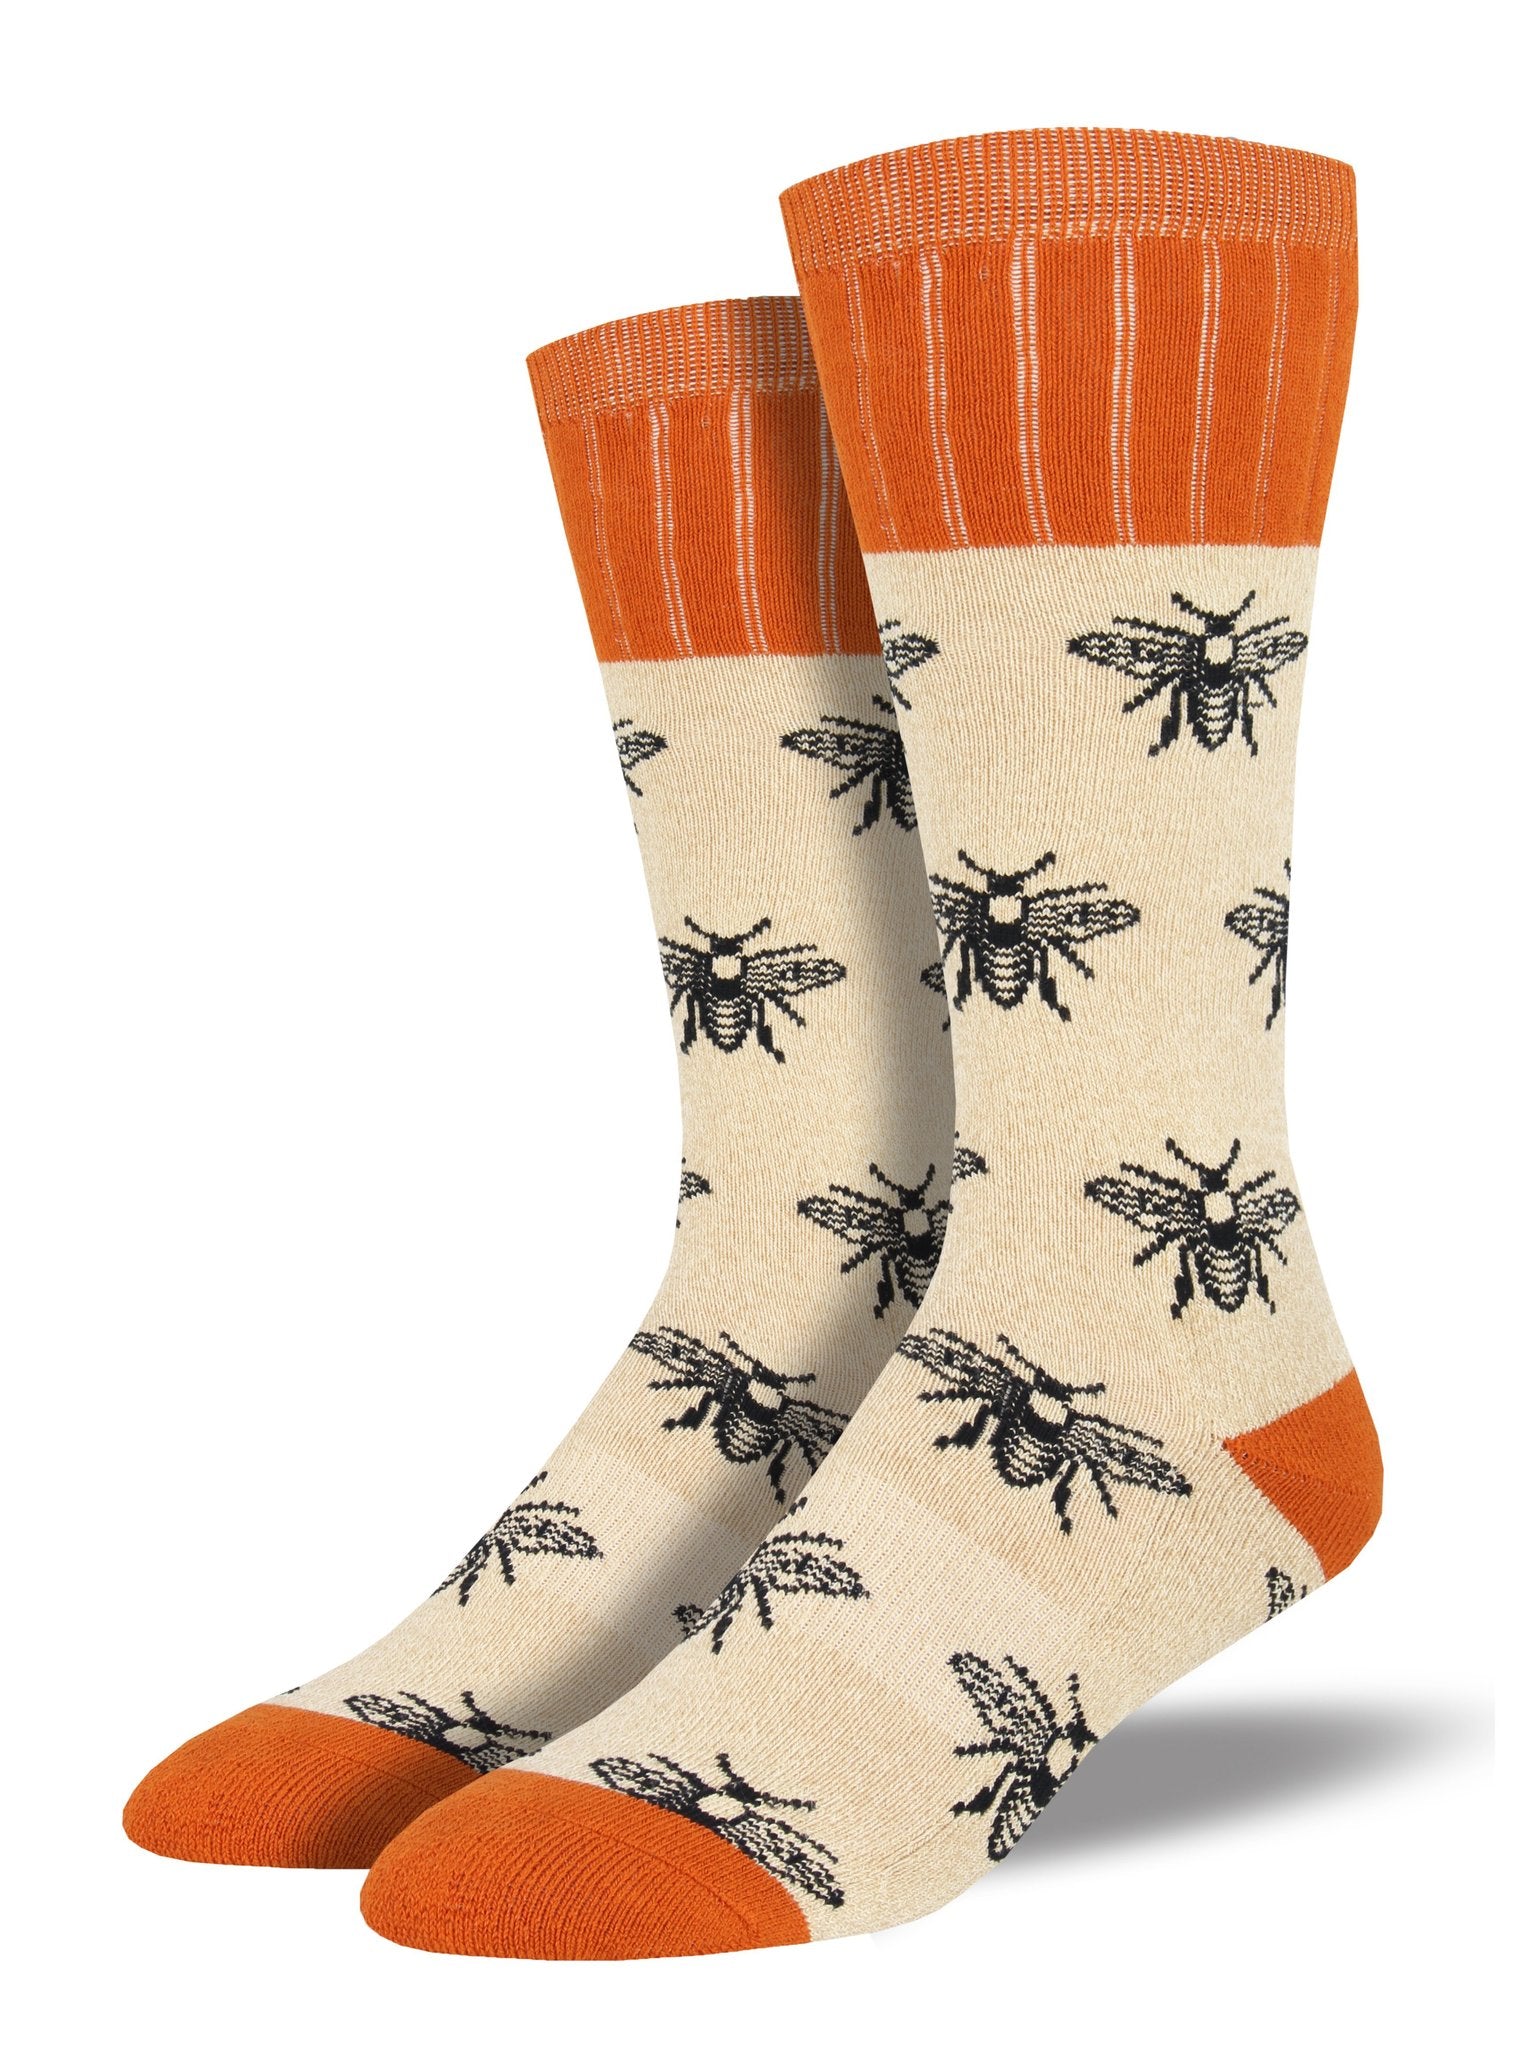 Outlands Men's Bee Socks